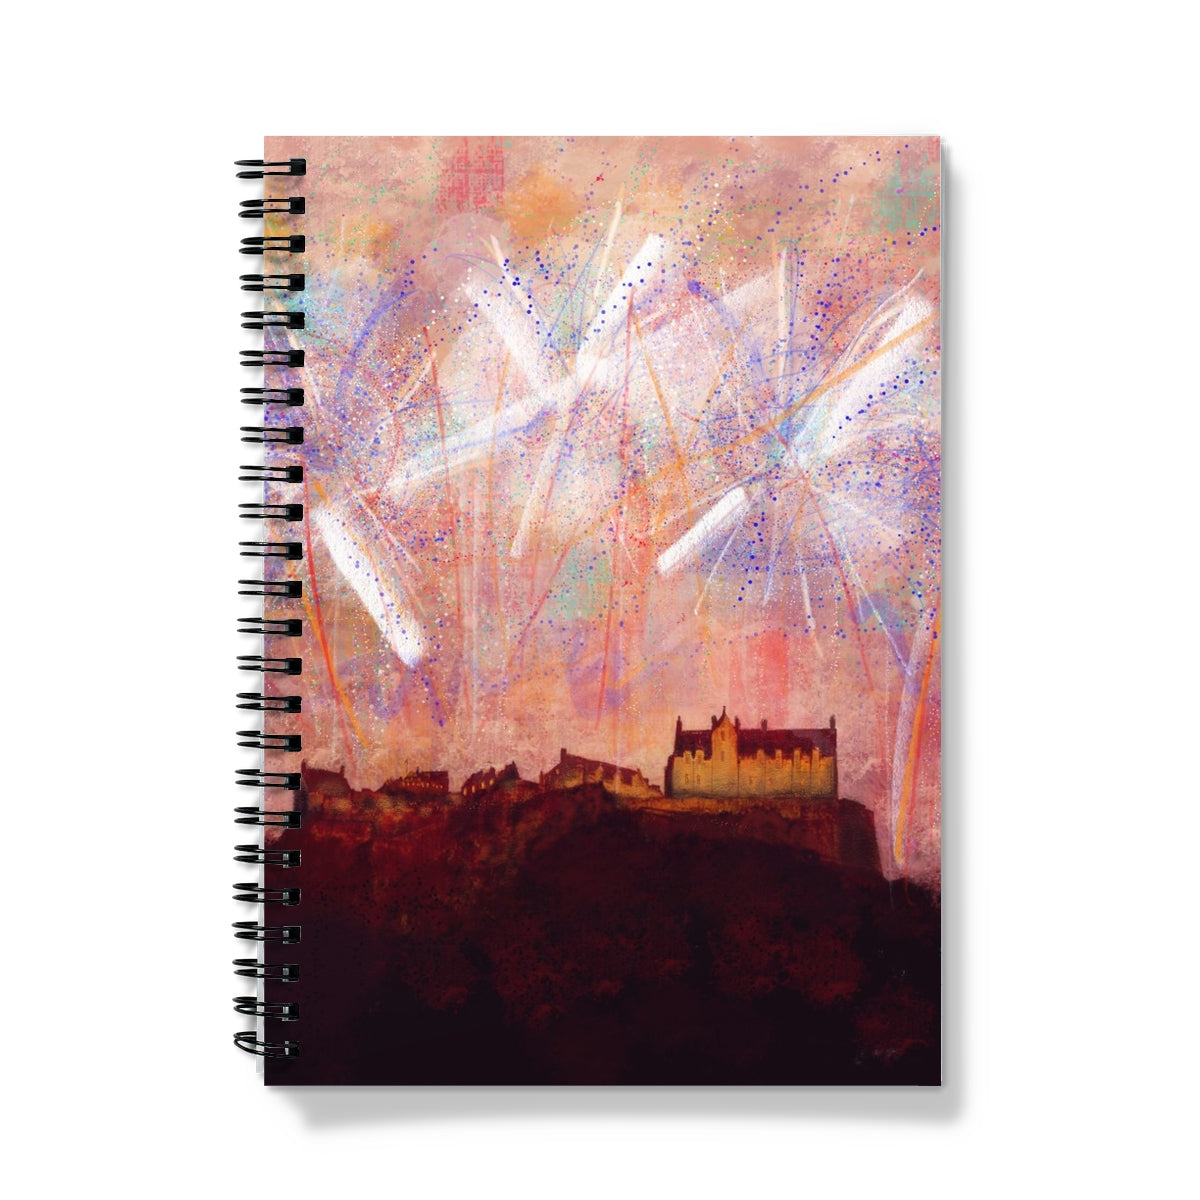 Edinburgh Castle Fireworks Art Gifts Notebook-Journals & Notebooks-Edinburgh & Glasgow Art Gallery-A5-Lined-Paintings, Prints, Homeware, Art Gifts From Scotland By Scottish Artist Kevin Hunter